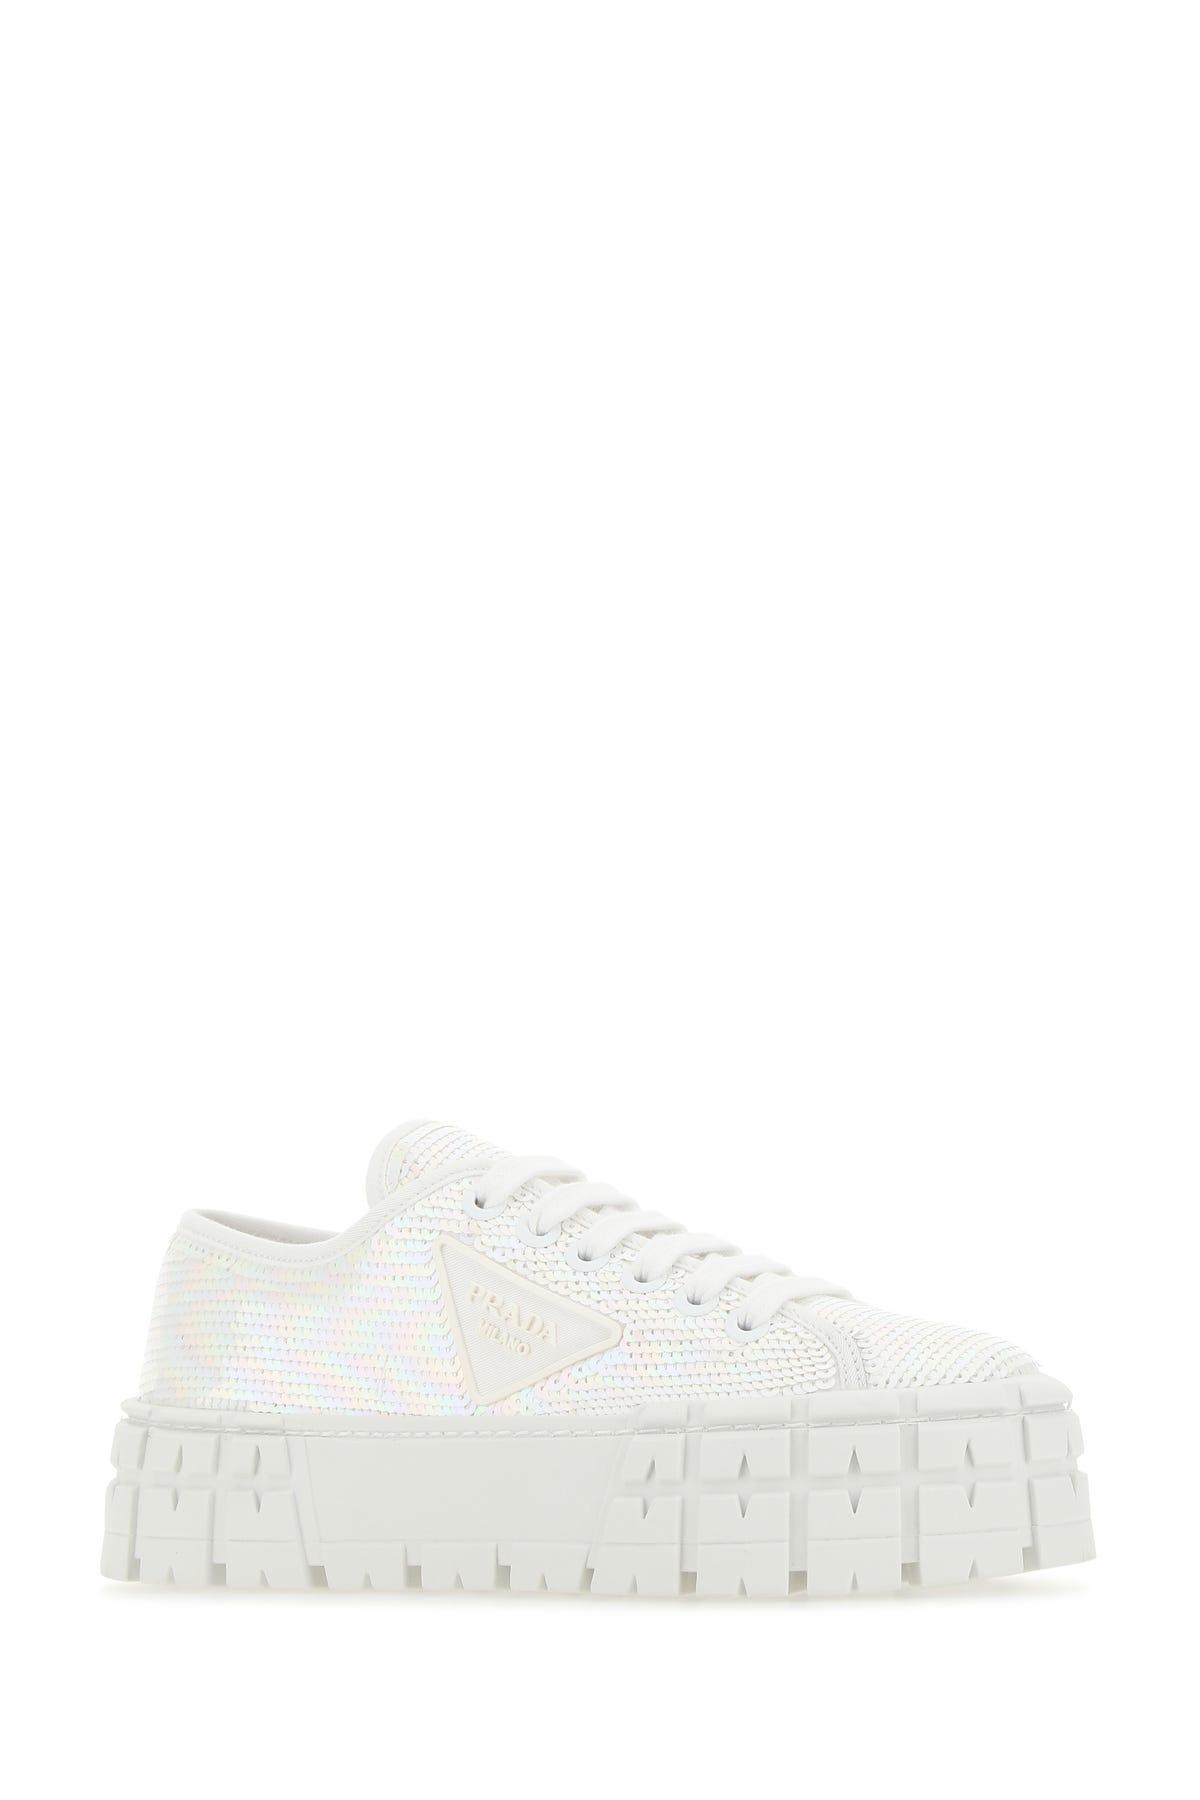 Prada Sequins Double Wheel Sneakers in White | Lyst